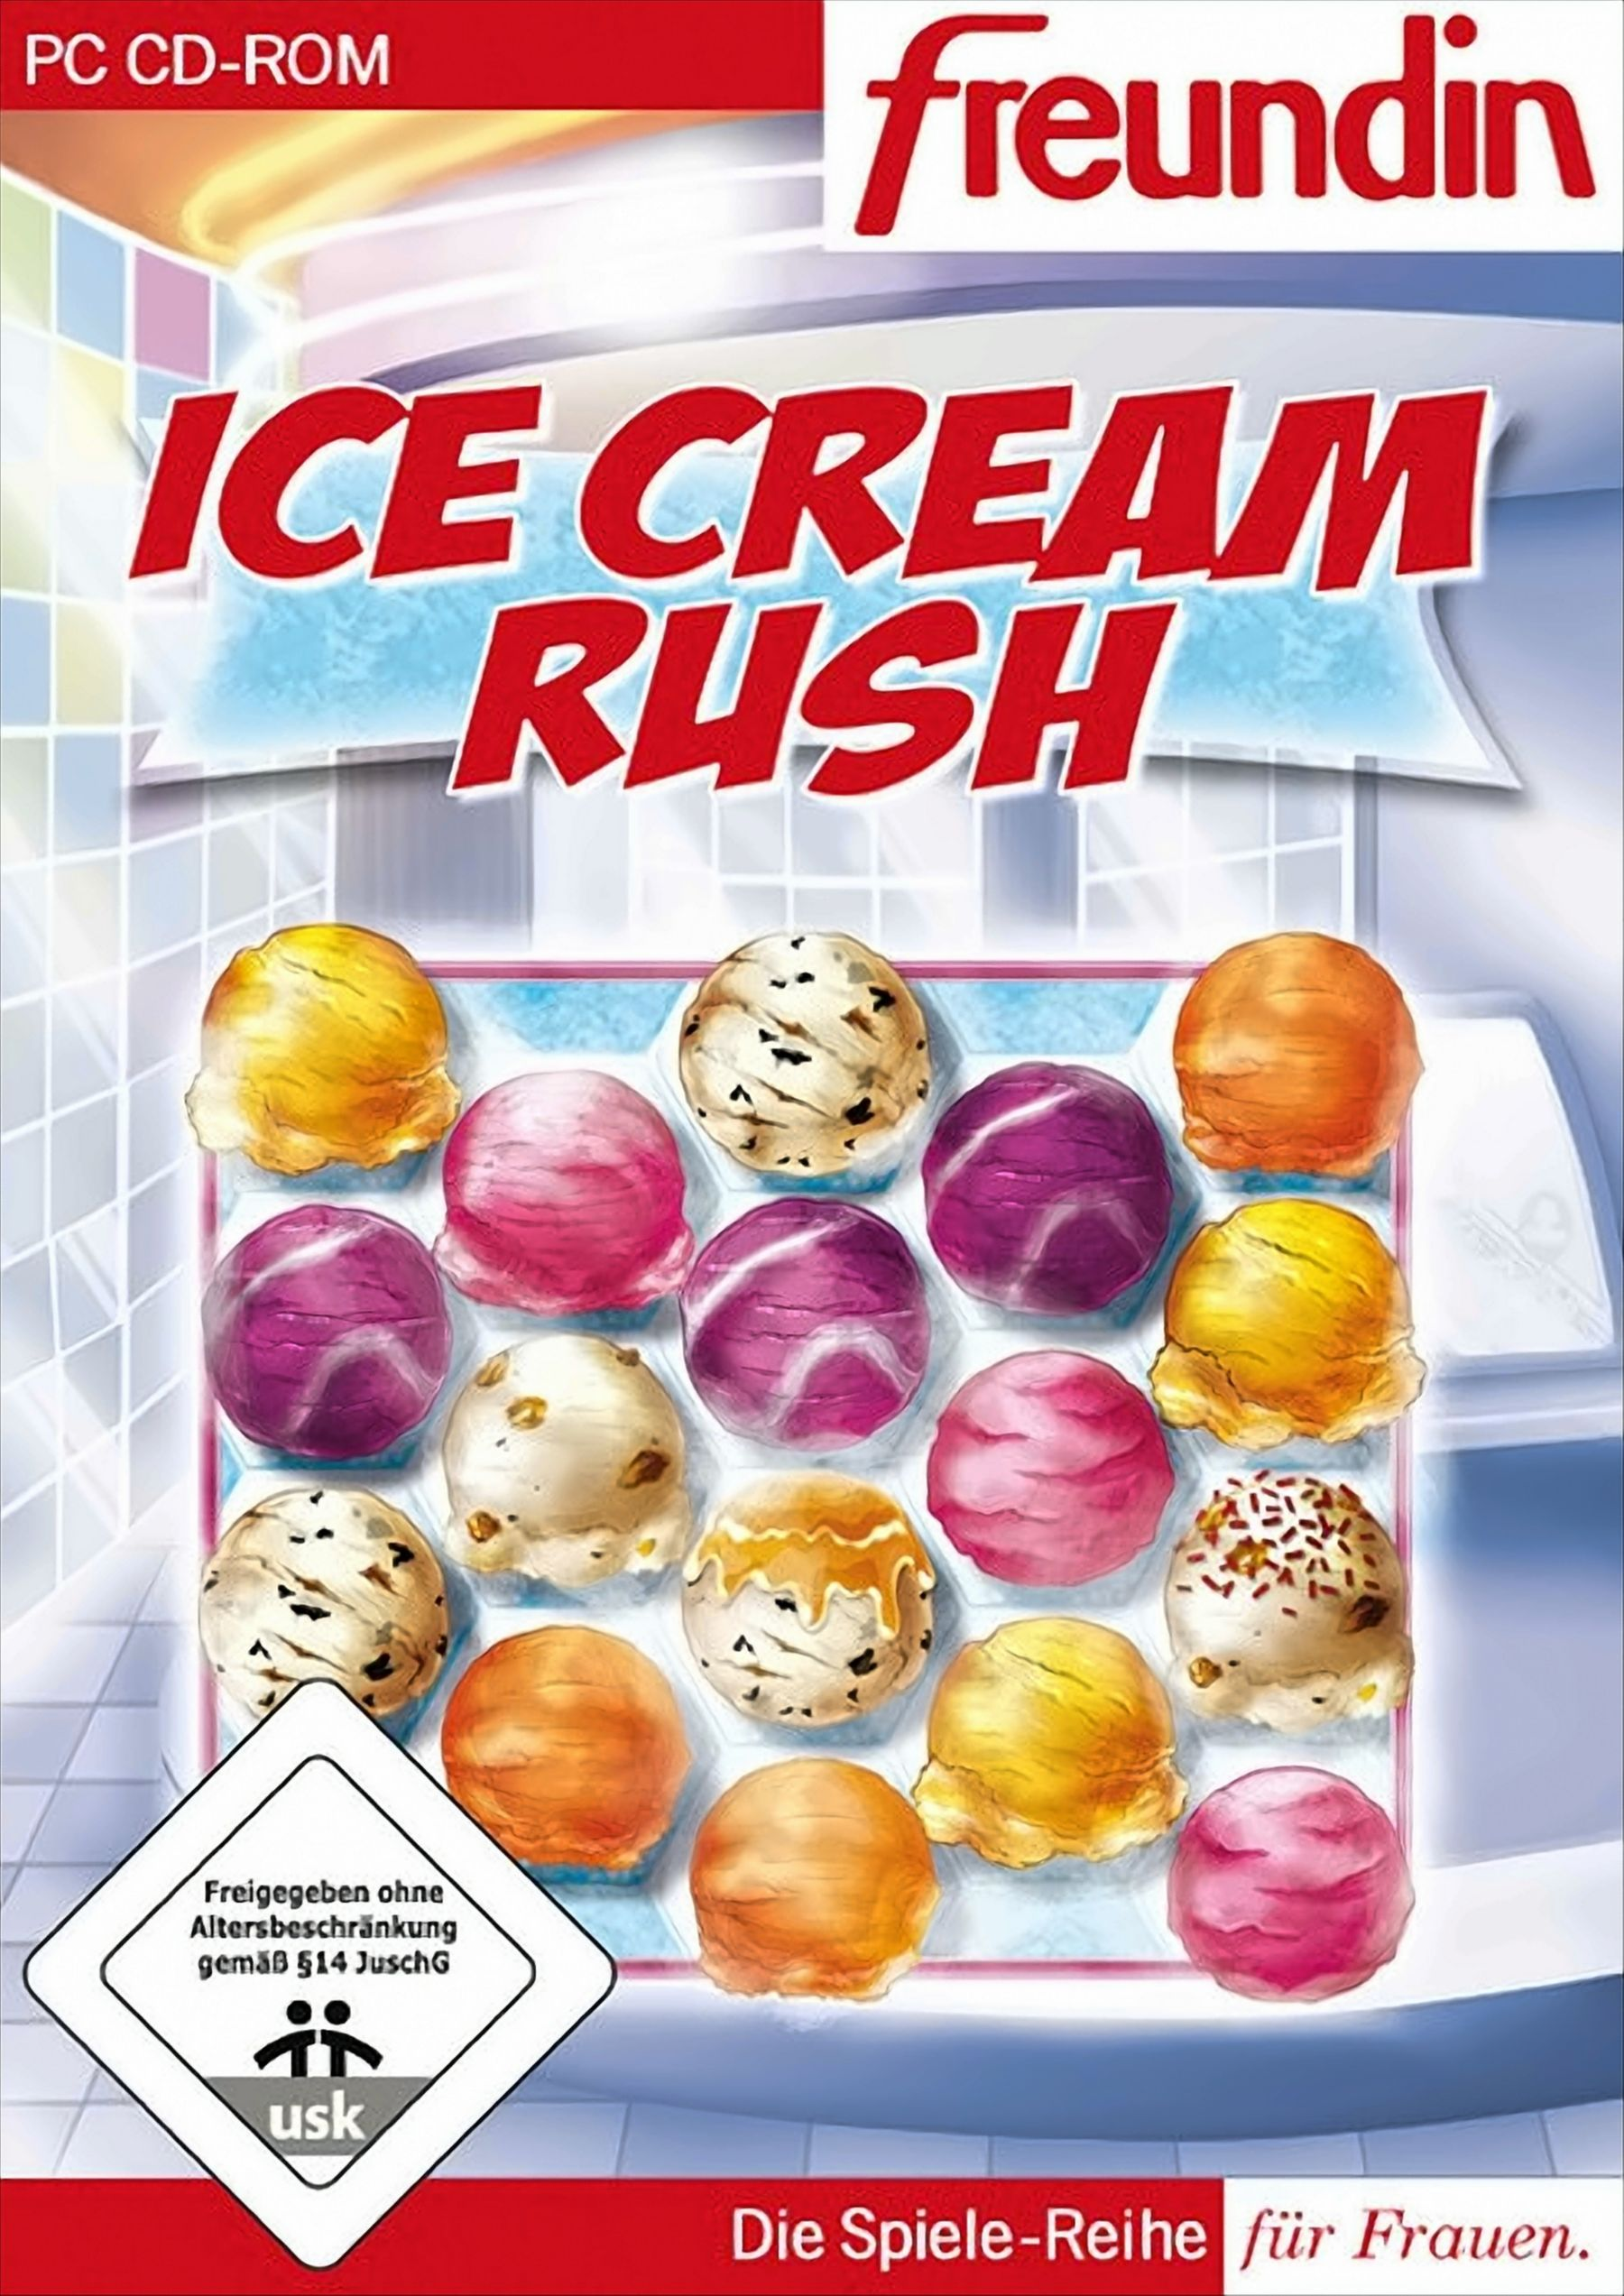 Cream Ice - Rush [PC]